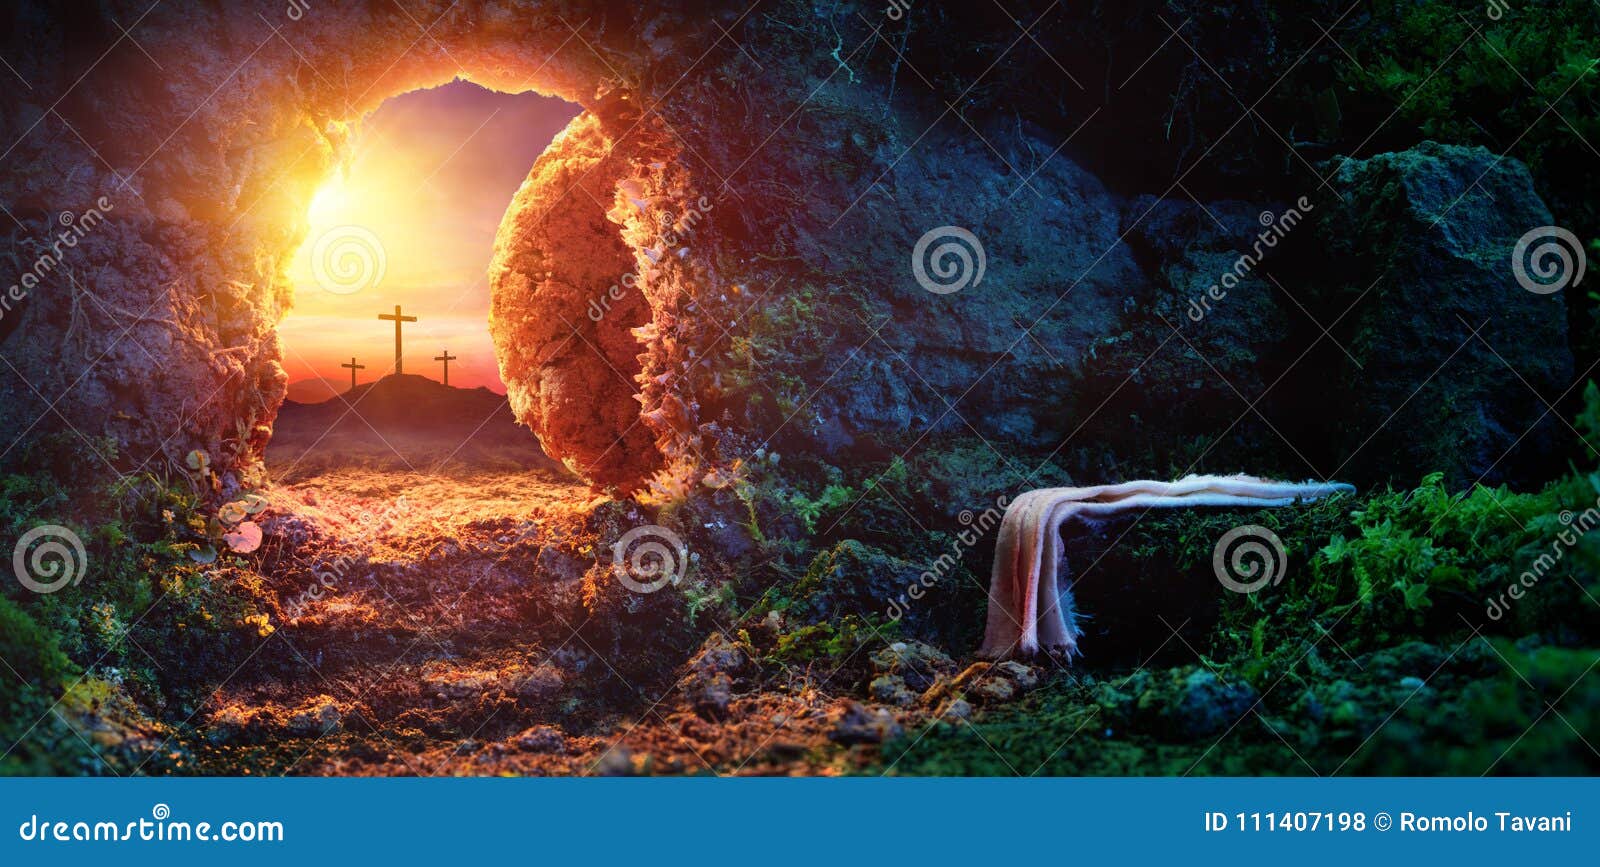 crucifixion at sunrise - empty tomb with shroud